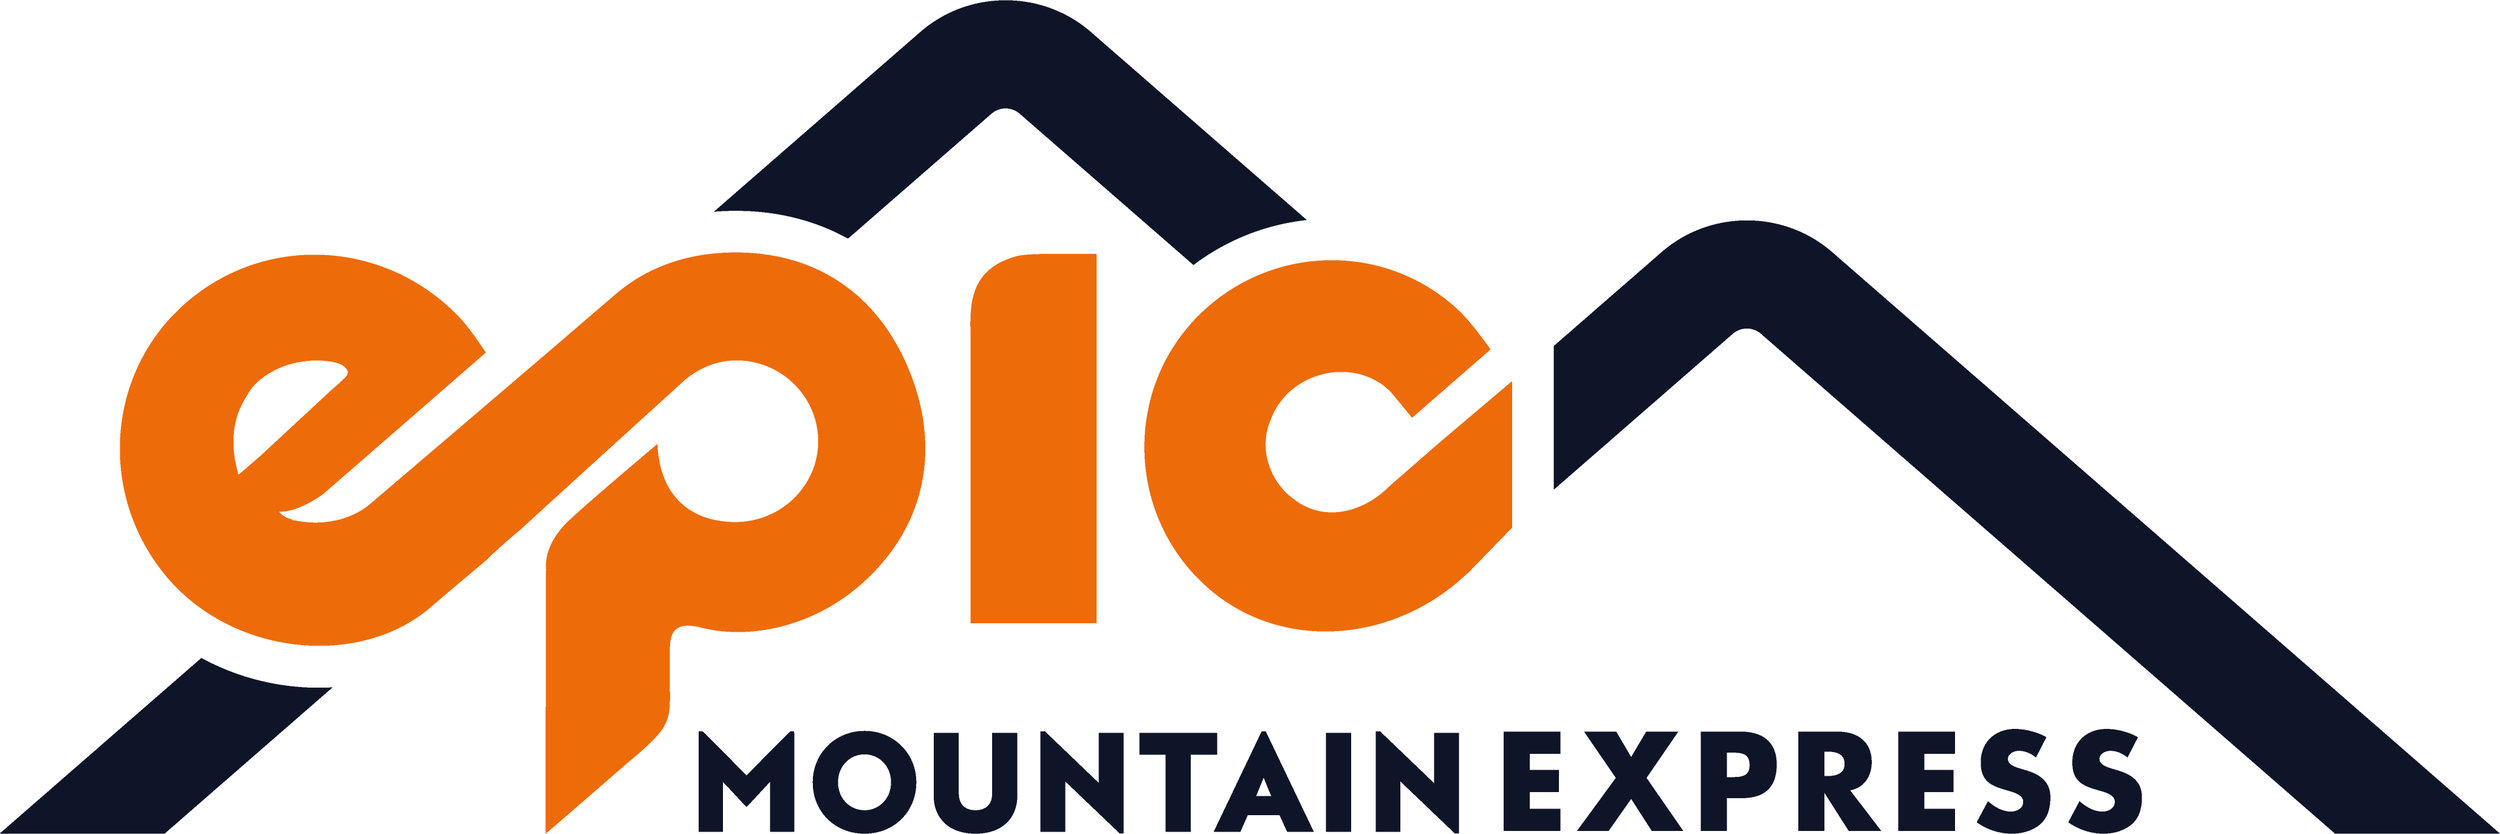 EPIC Mountain Express Logo_Web.jpg